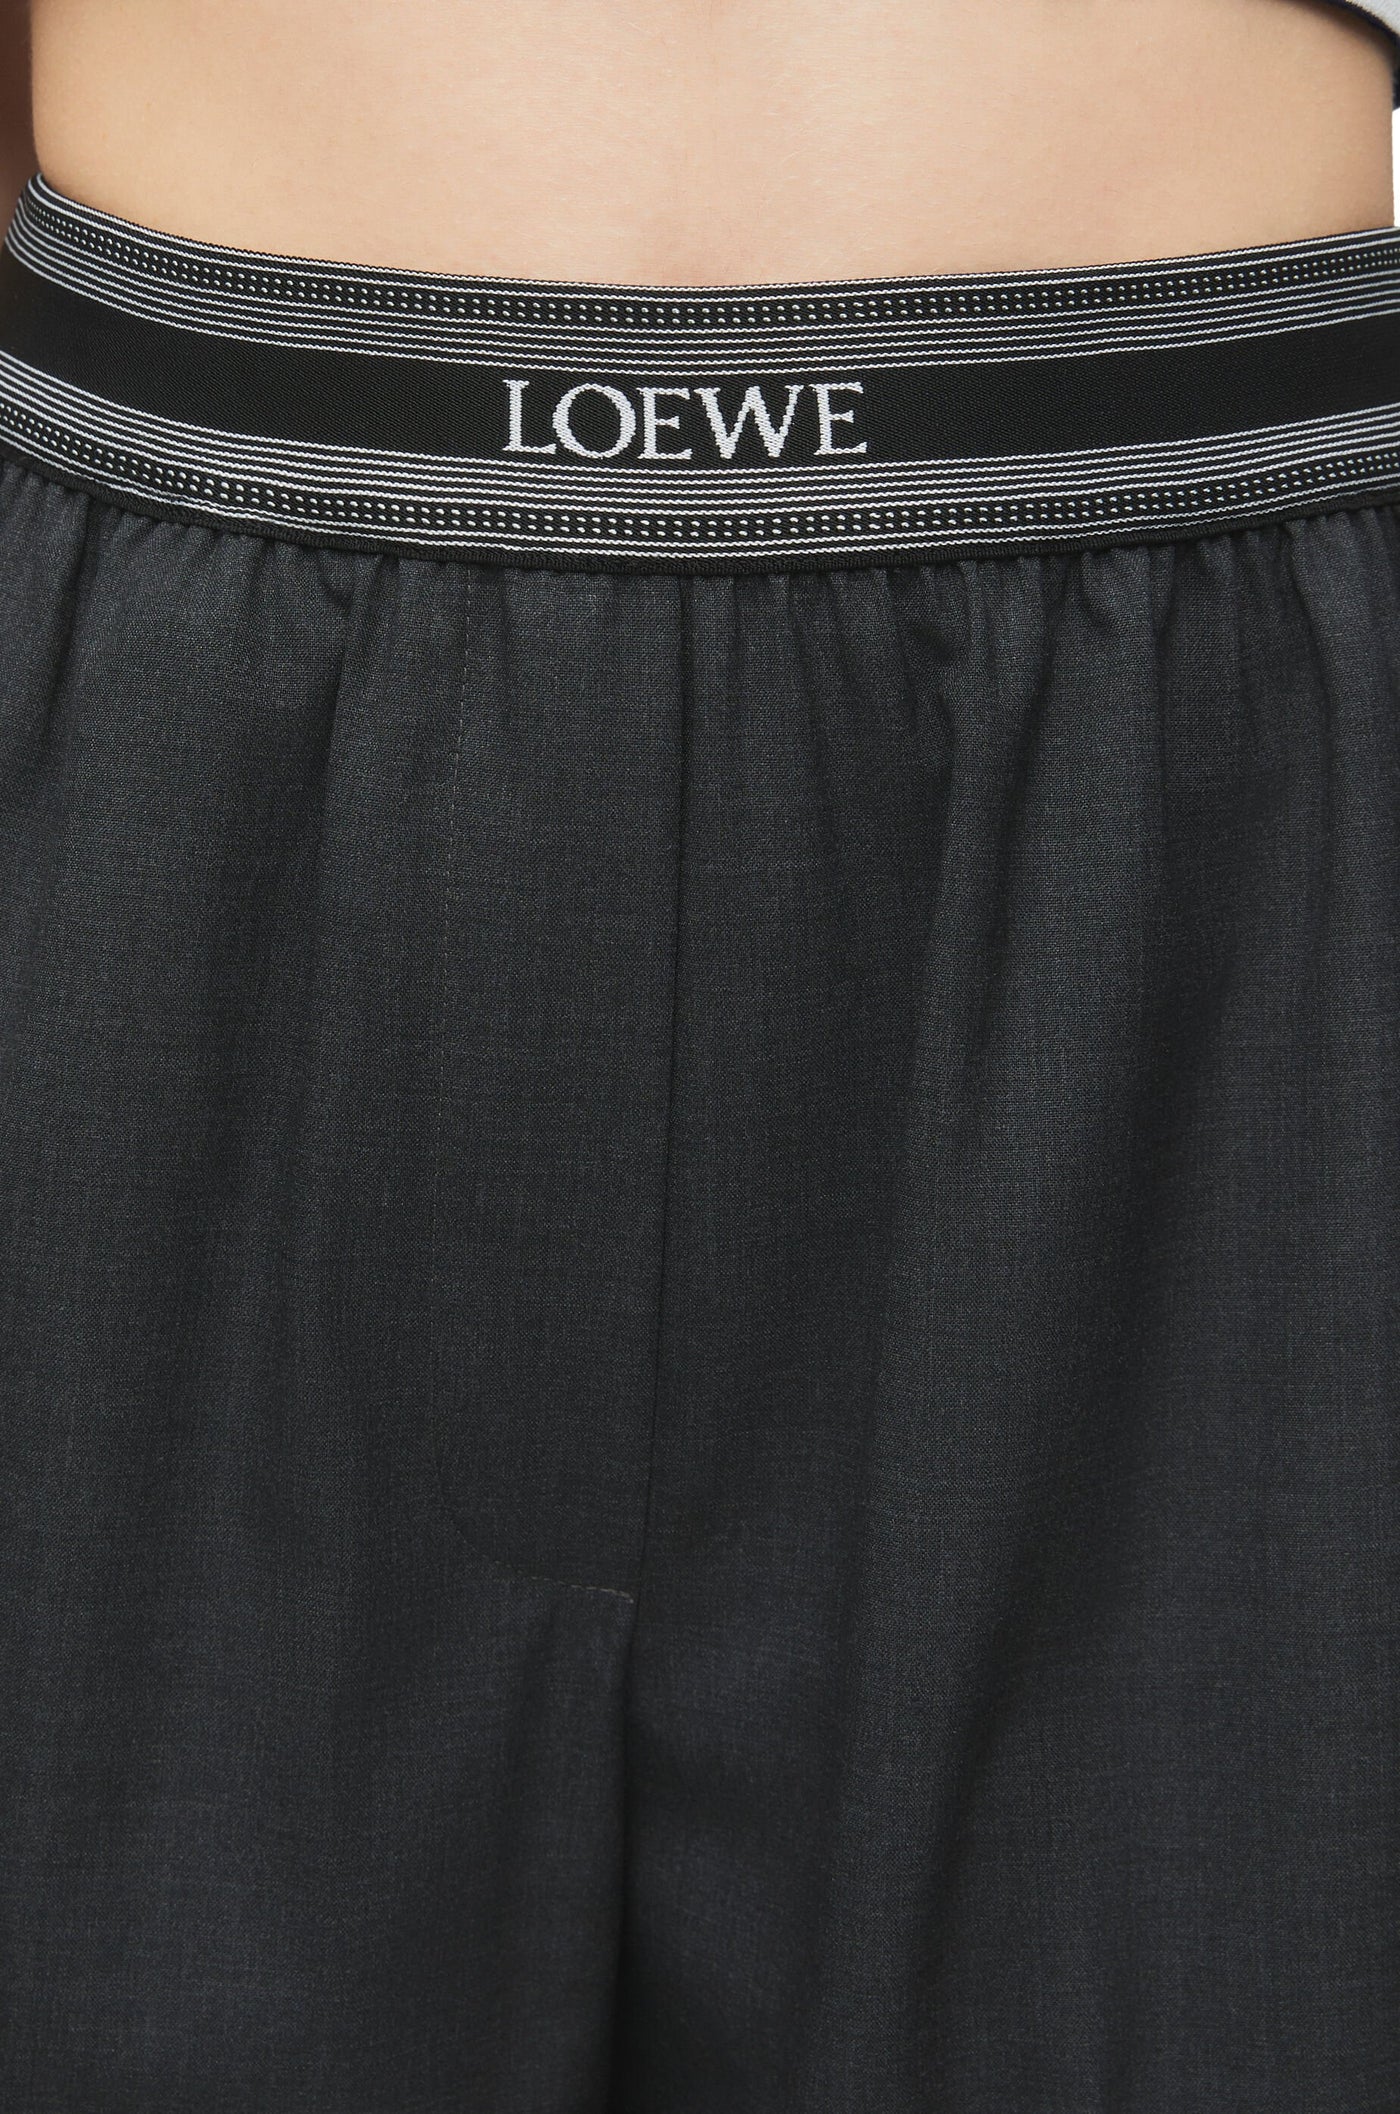 LOEWE - cropped trousers